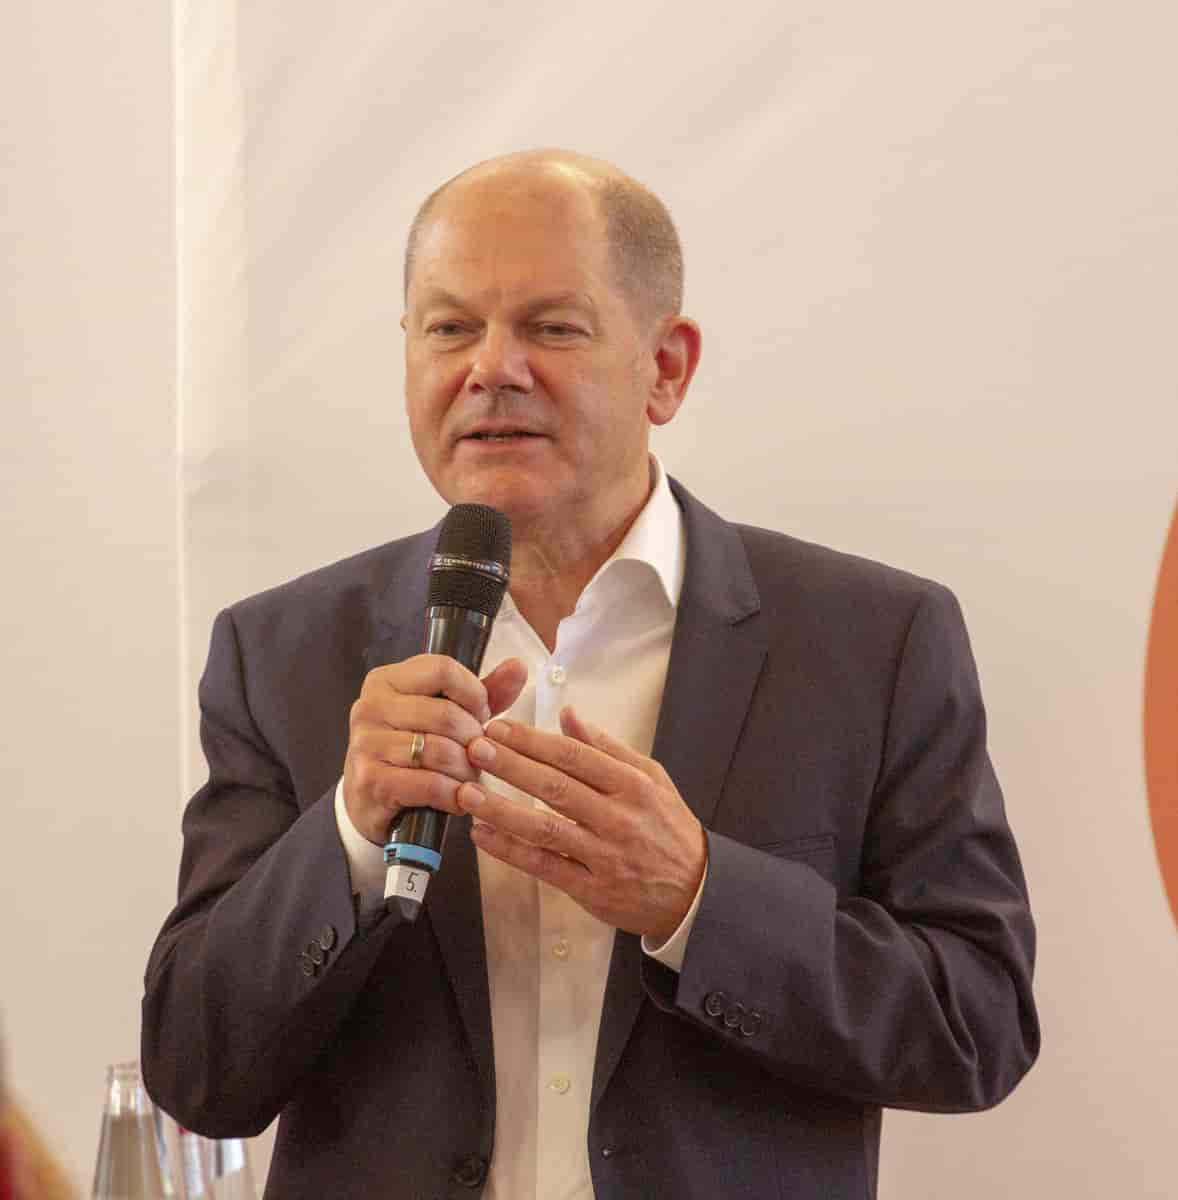 Olaf Scholz i 2019